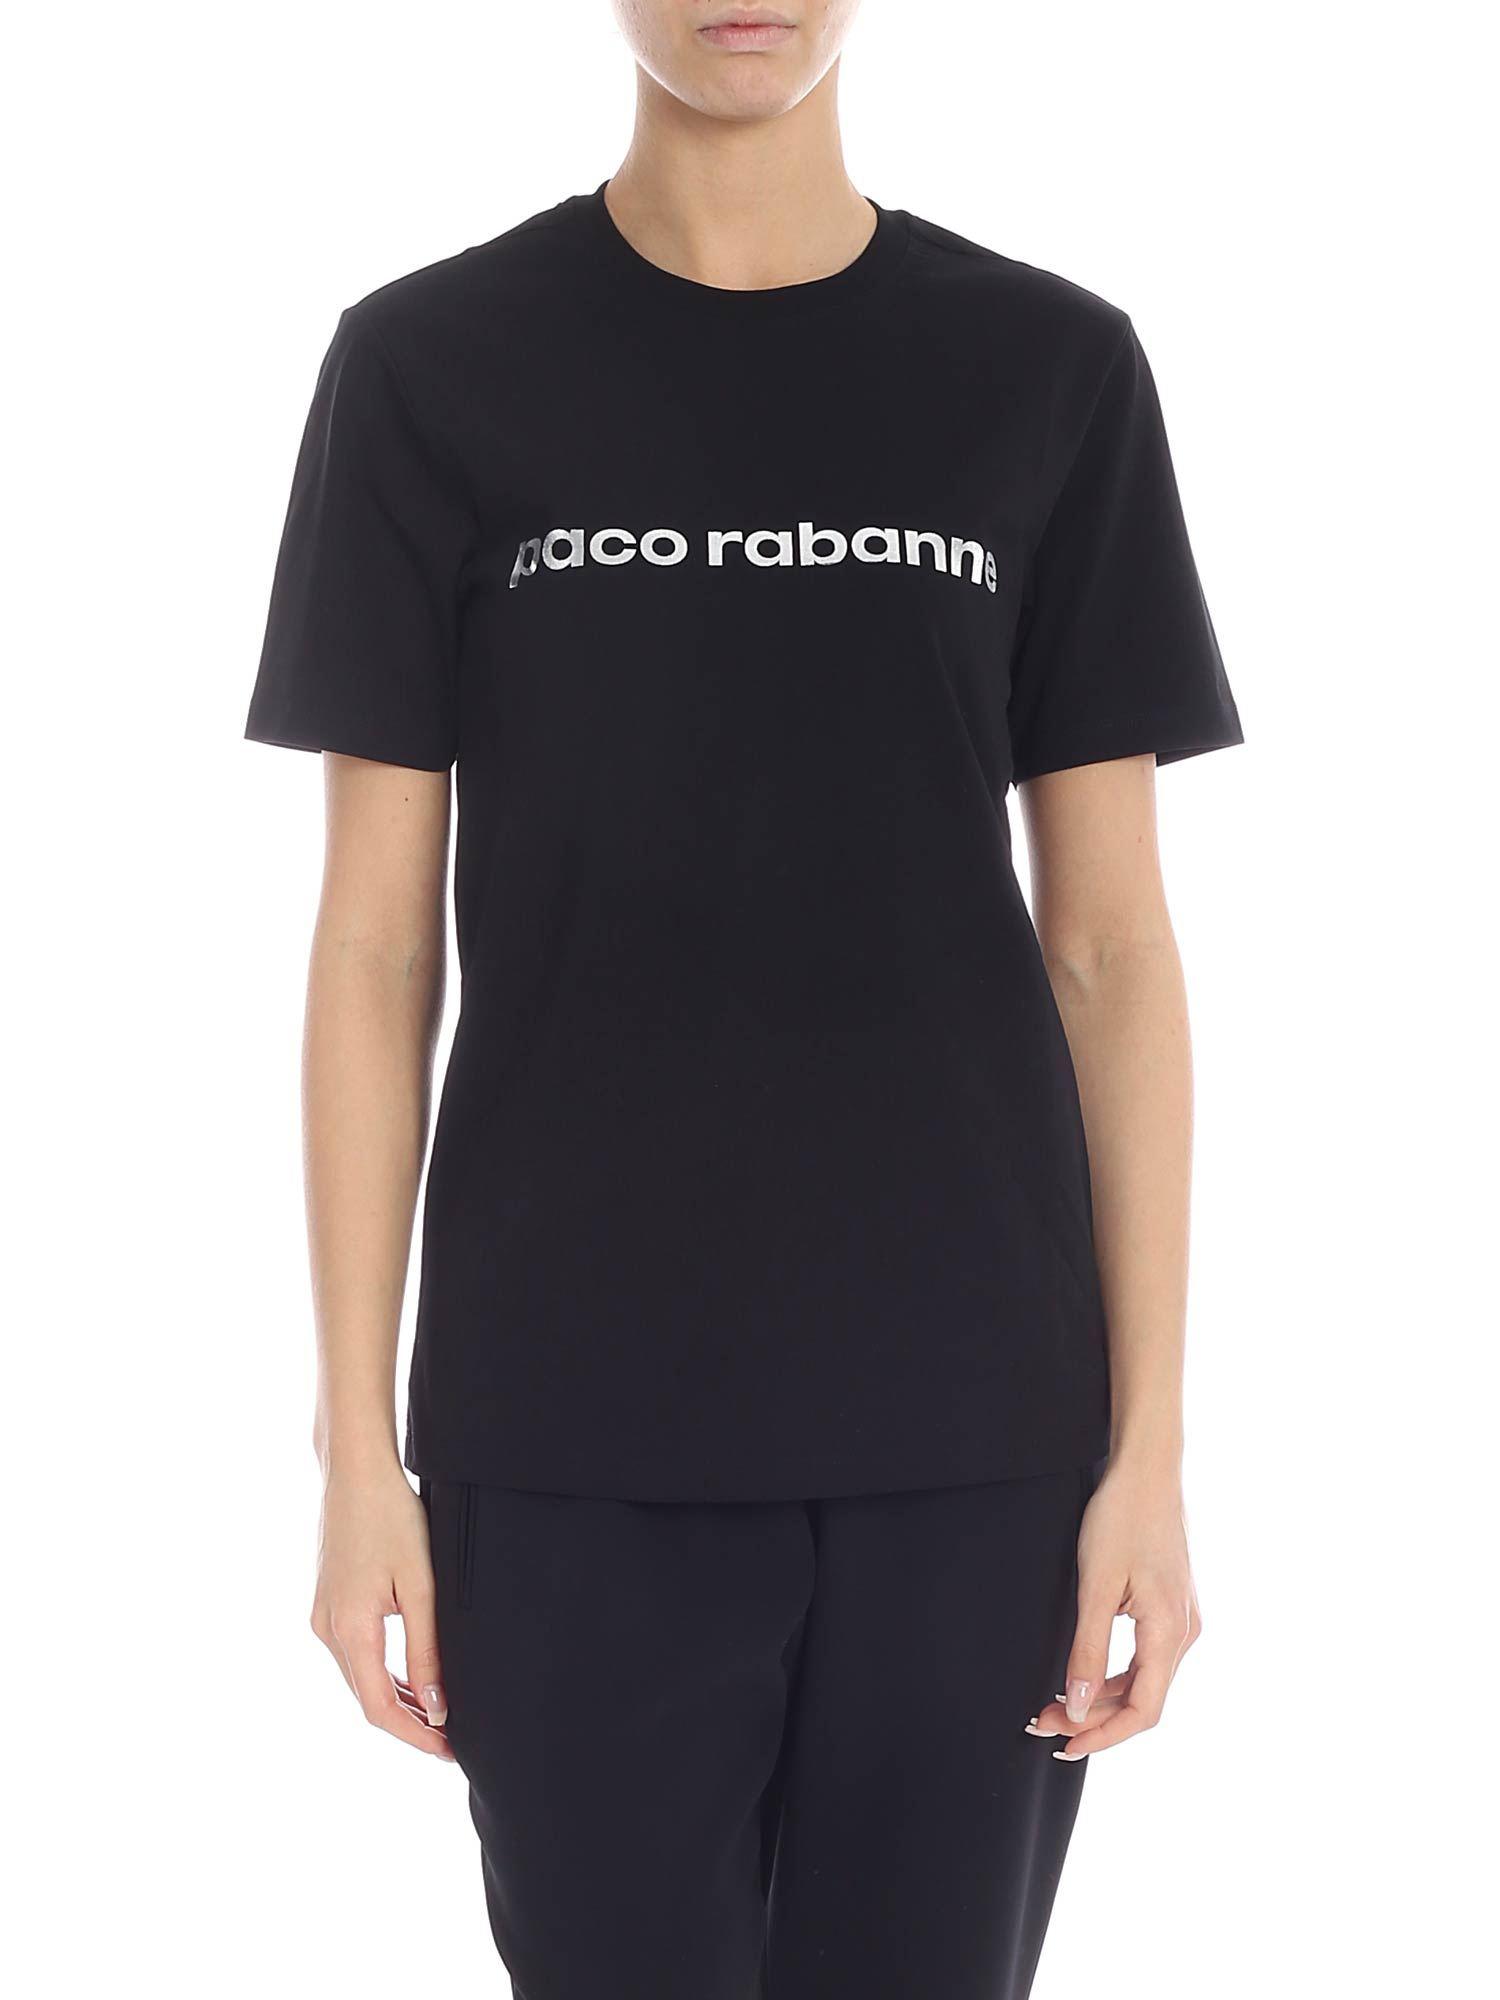 Paco Rabanne Logo Printed T-shirt in Black - Save 45% - Lyst